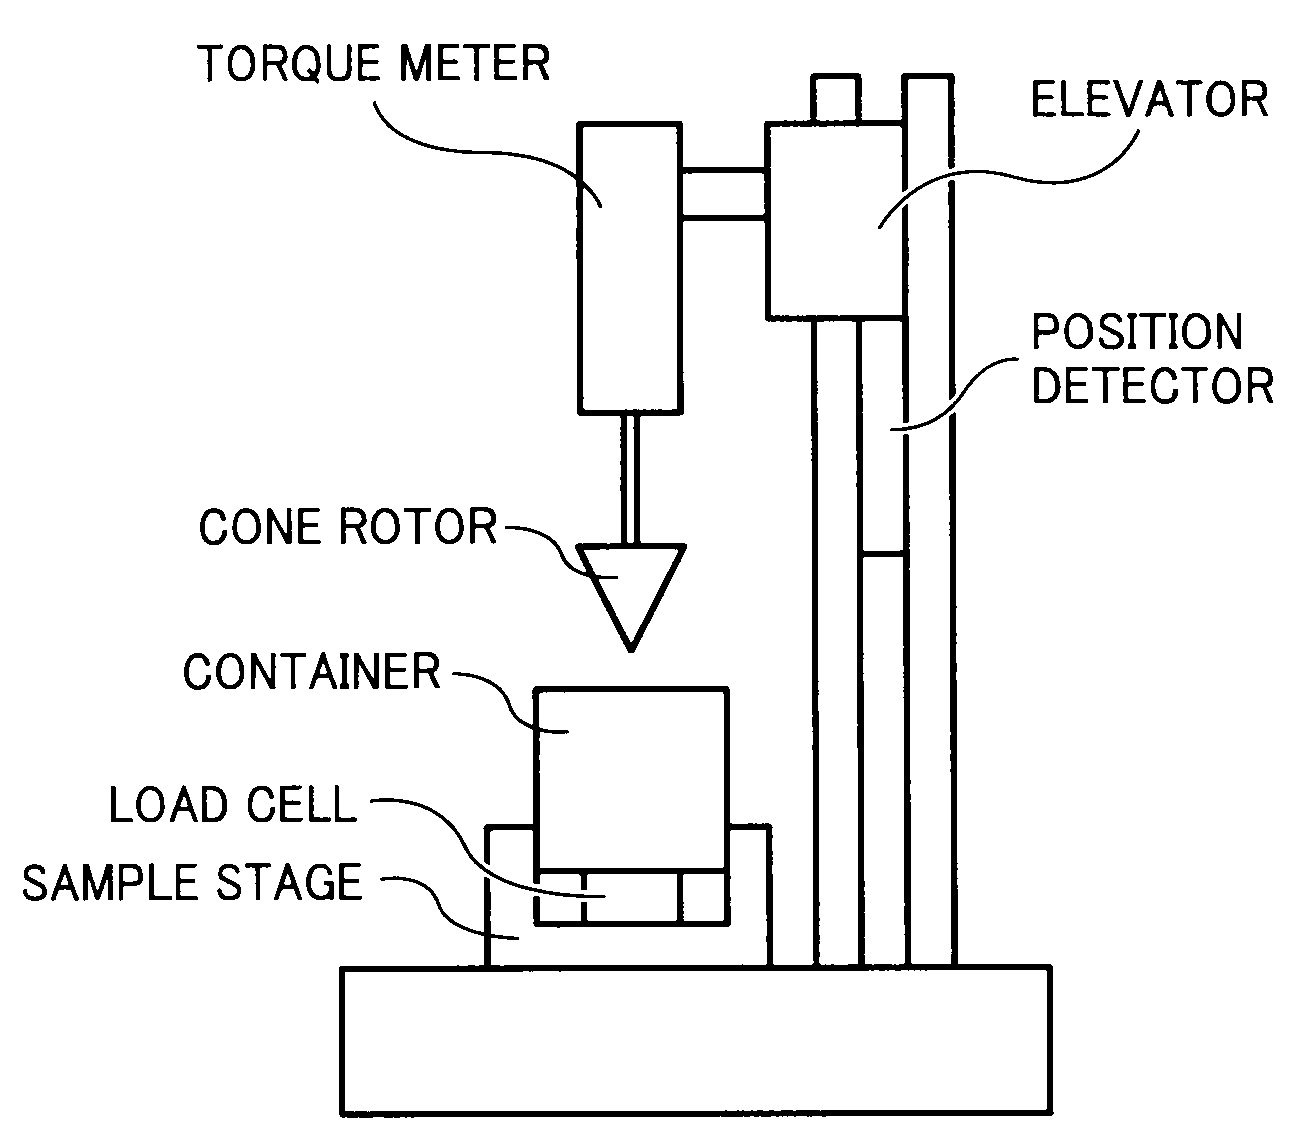 Toner, developer, process cartridge, and image forming apparatus